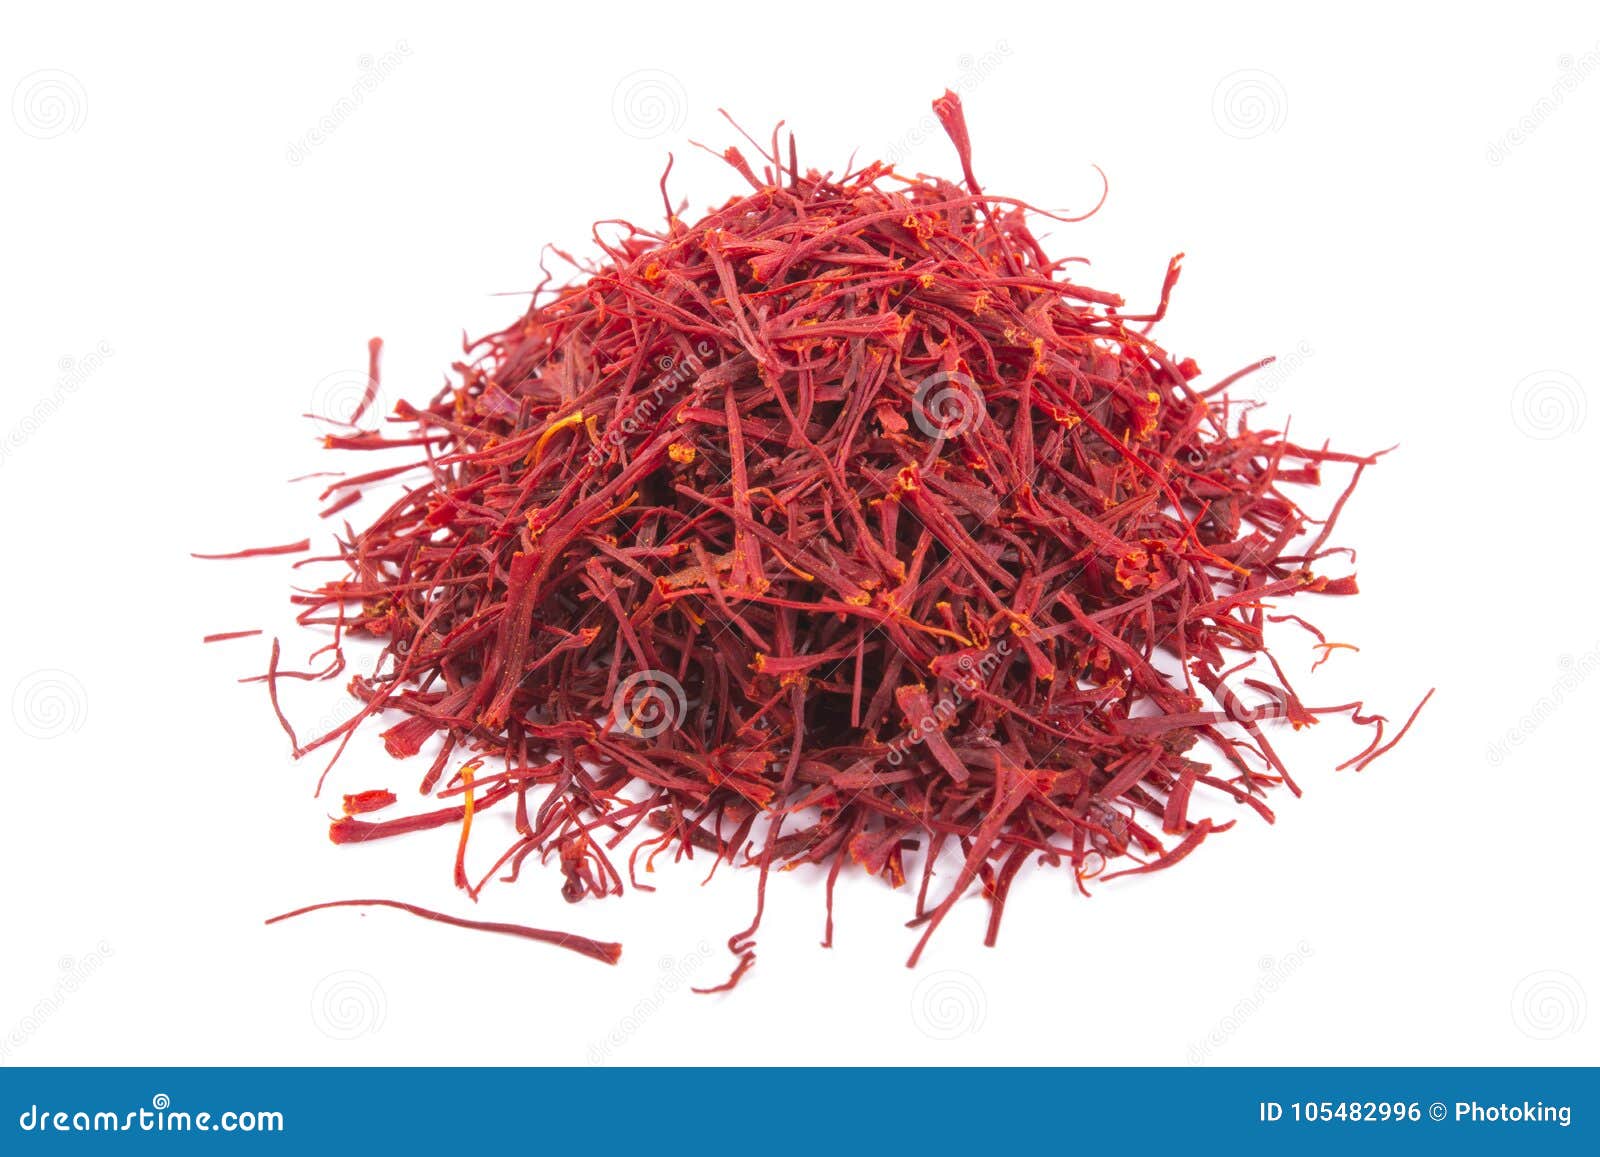 saffron spice